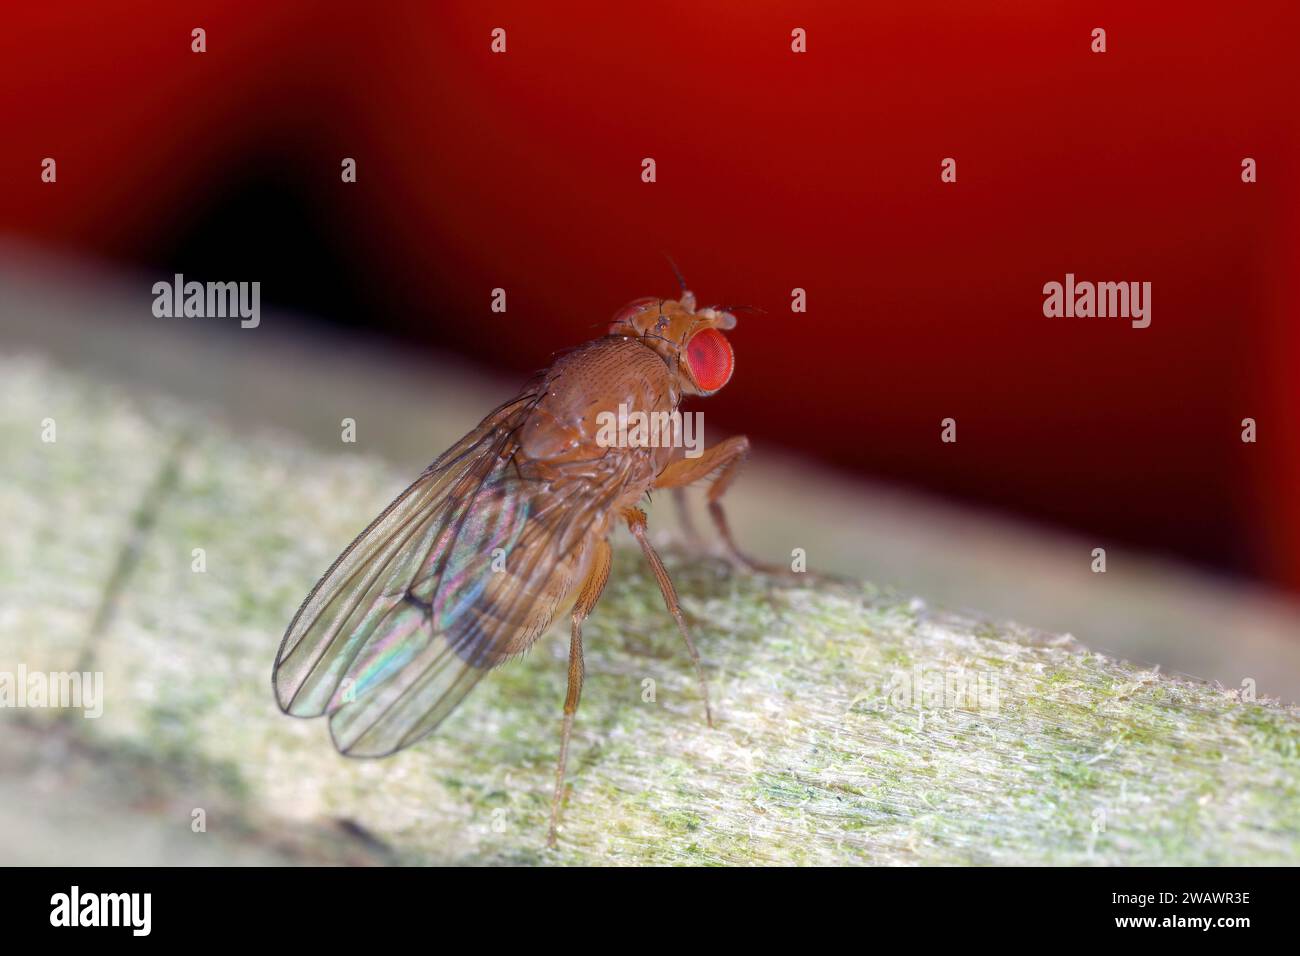 Spotted Wing Drosophila or Cherry Vinegar Fly